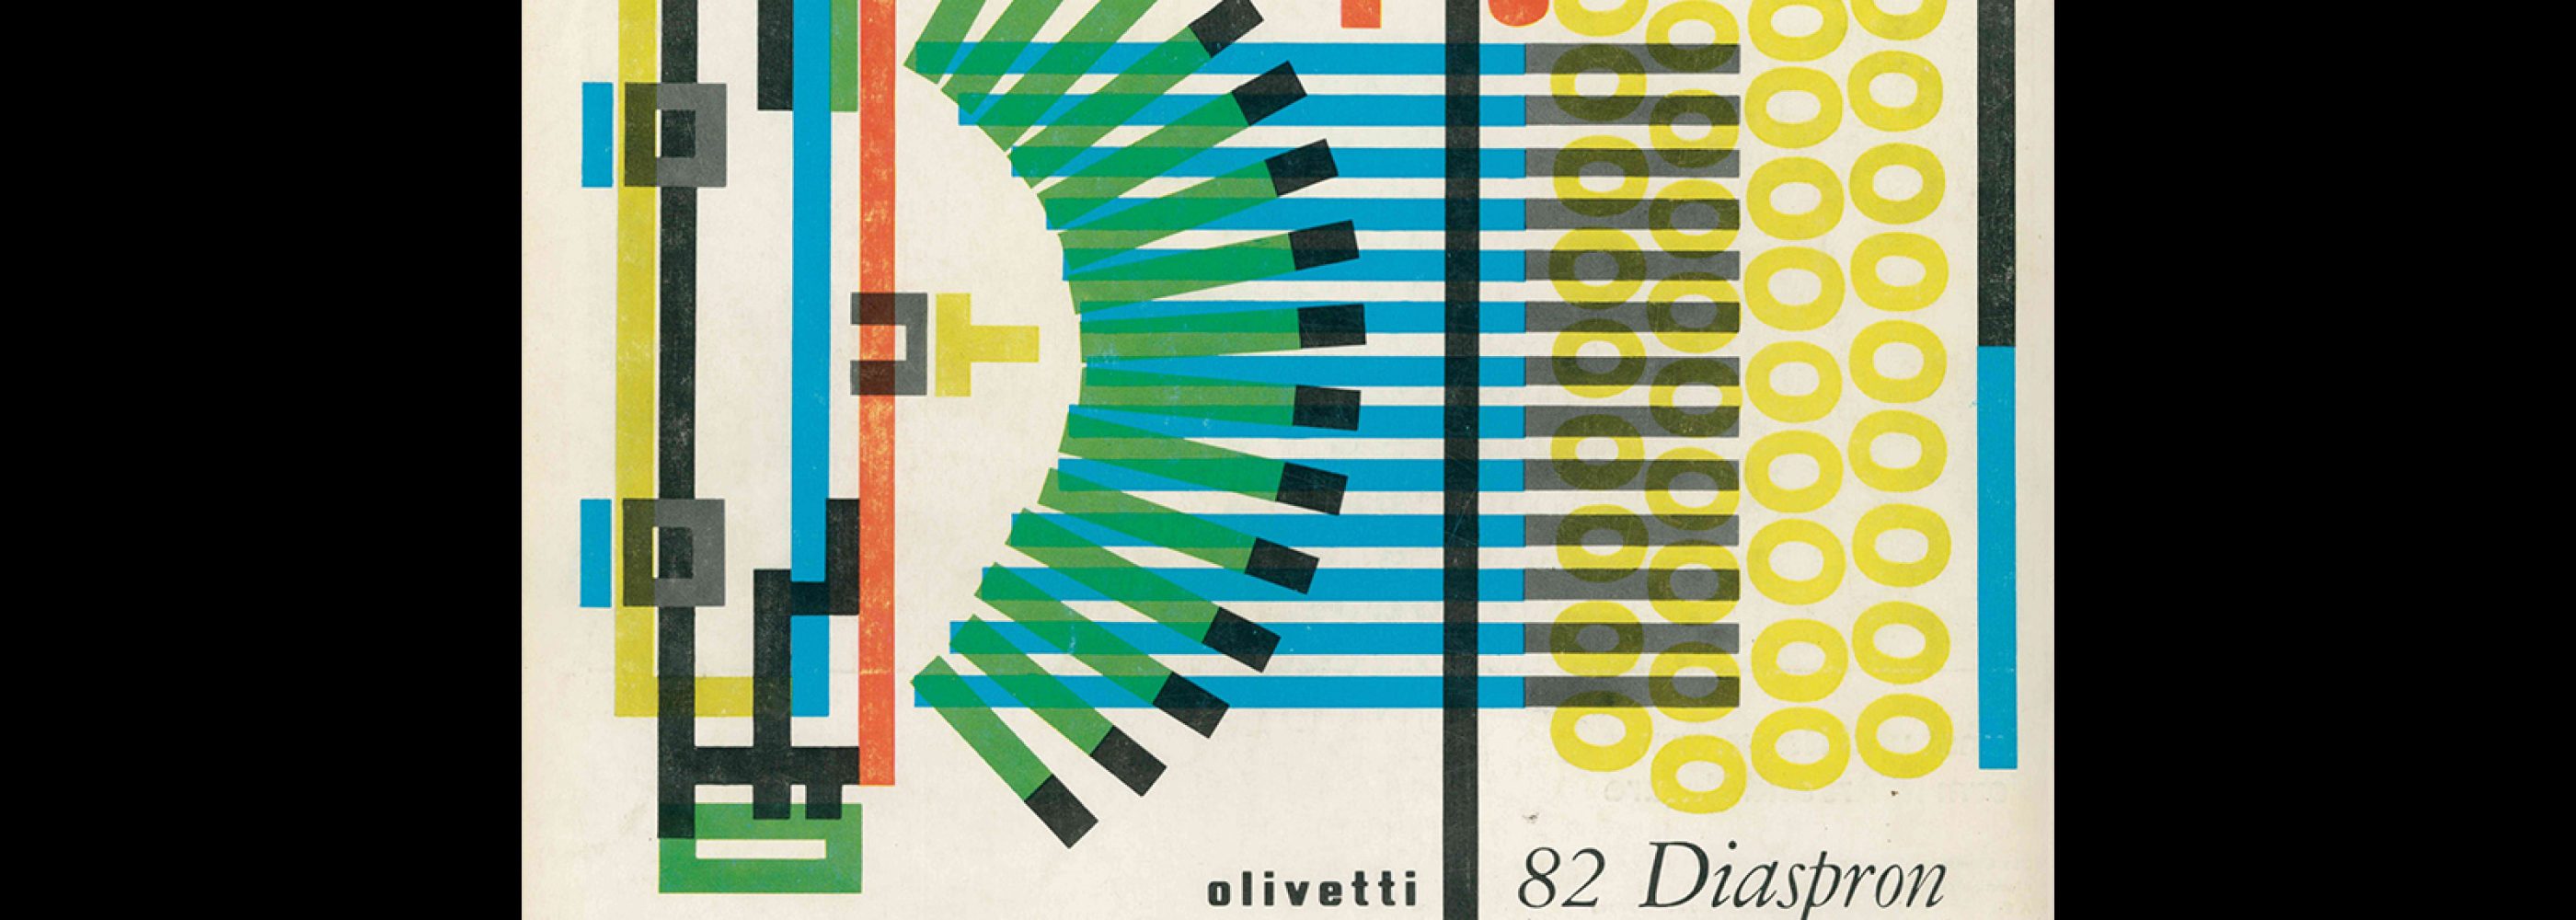 Olivetti Diaspron 82, advertisement, 1959. Designed by Giovanni Pintori.